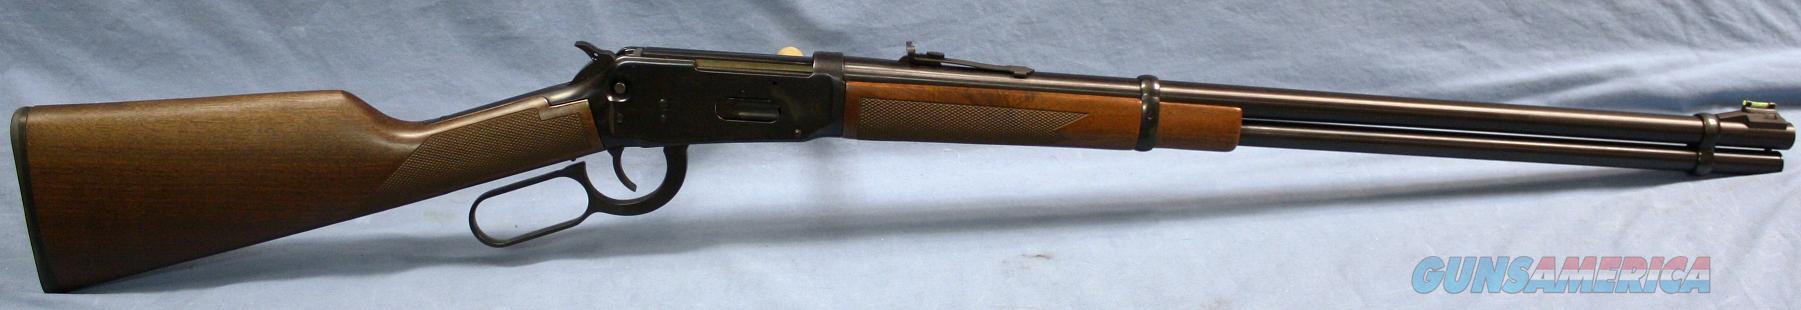 recoil pad winchester model 25